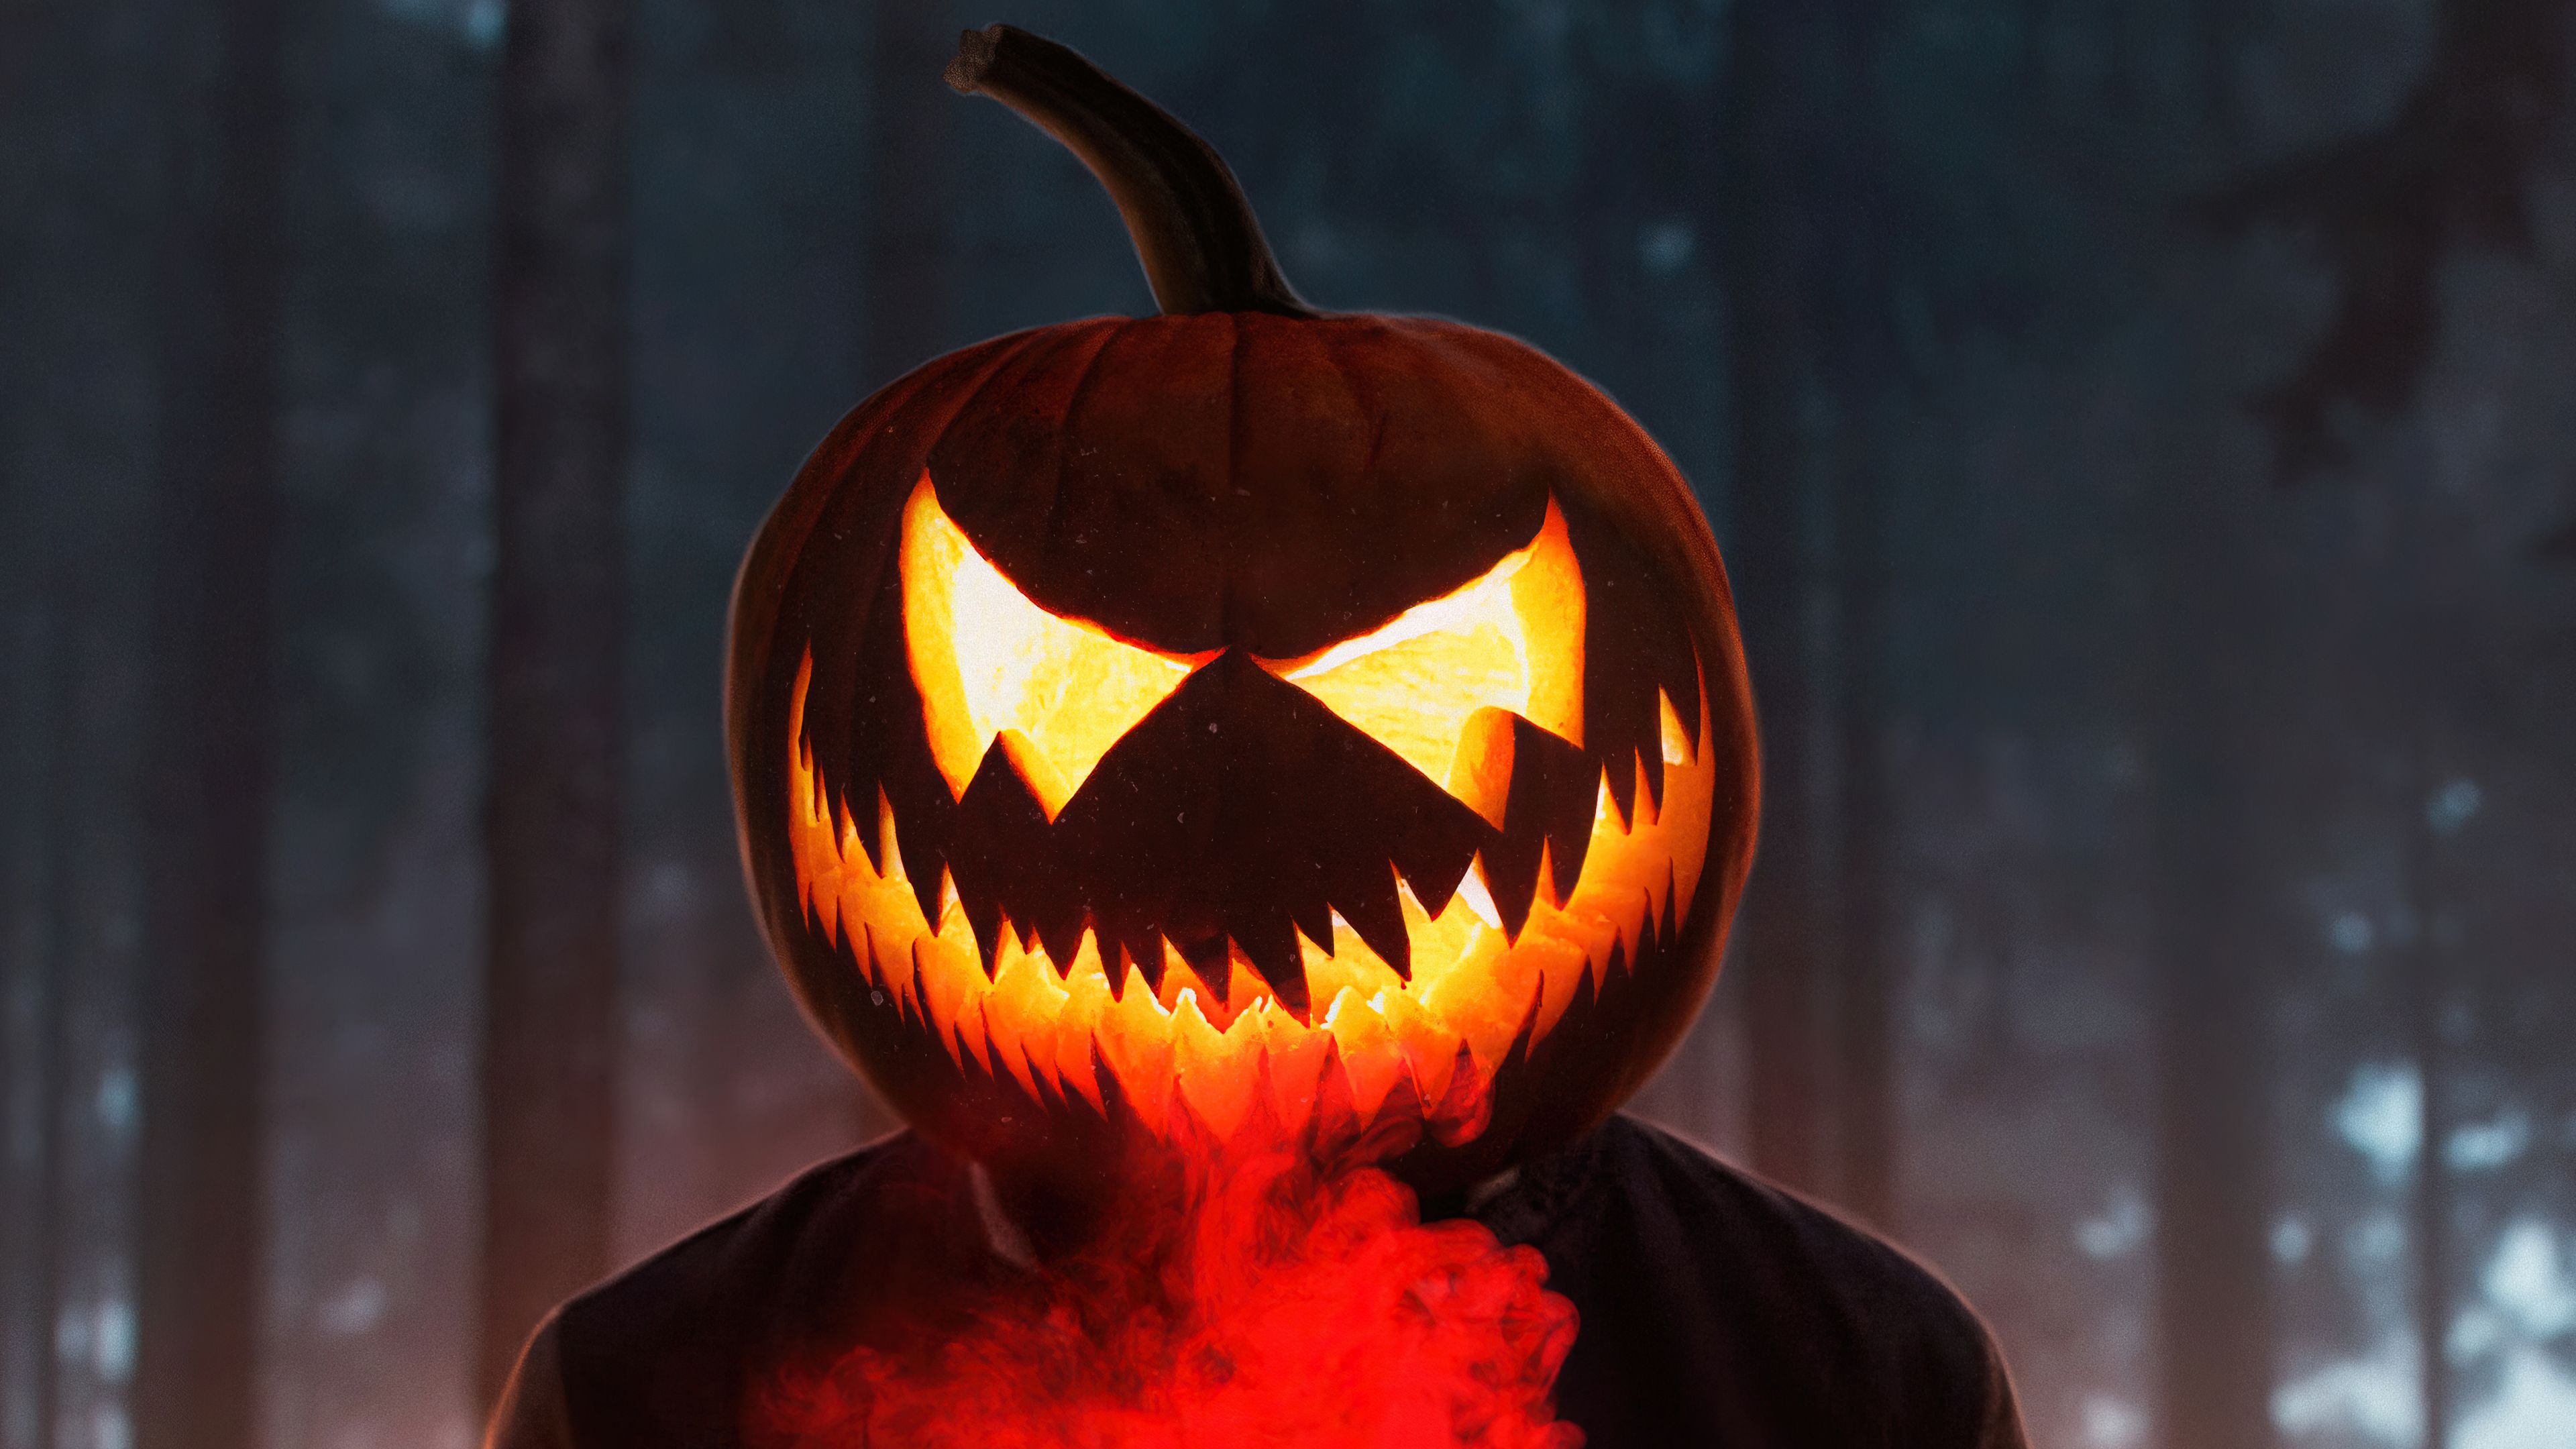 Halloween Glowing Mask Boy 4k Macbook Pro Retina HD 4k Wallpaper, Image, Background, Photo and Picture